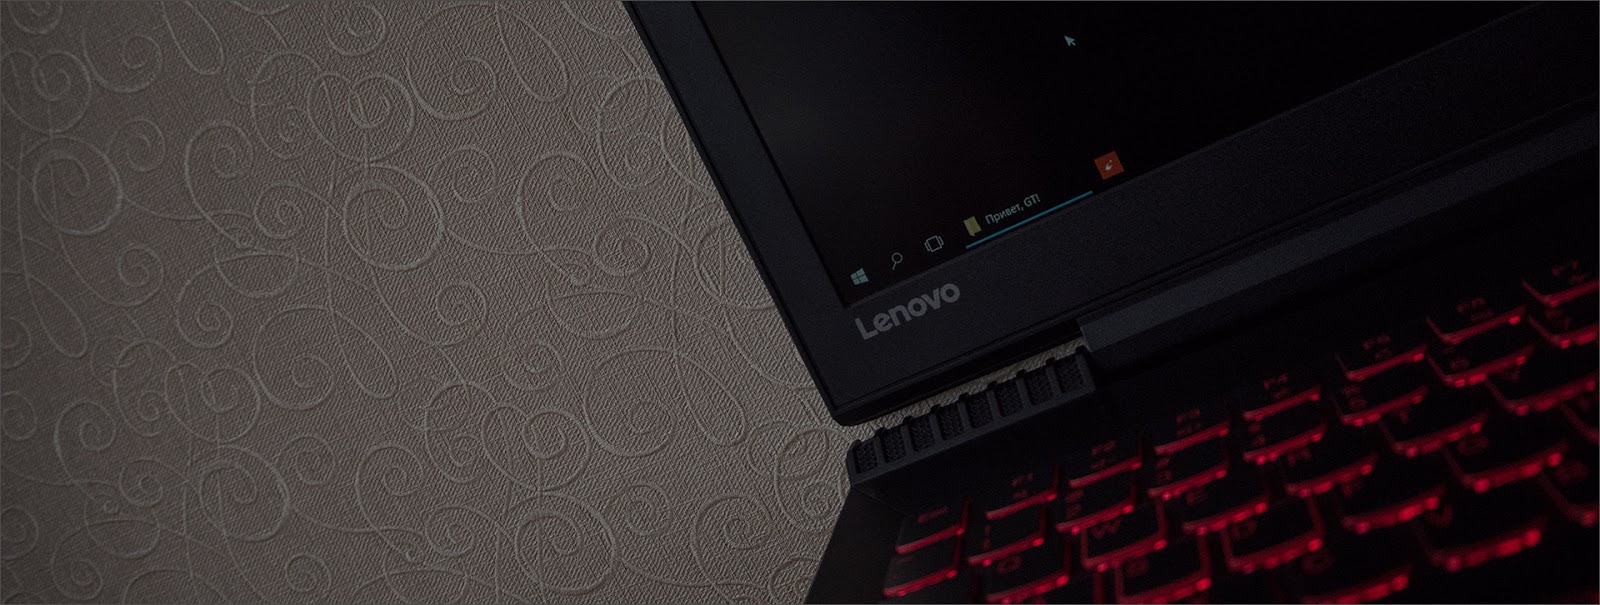 Балансируем на грани разумного с Lenovo Y520 - 4